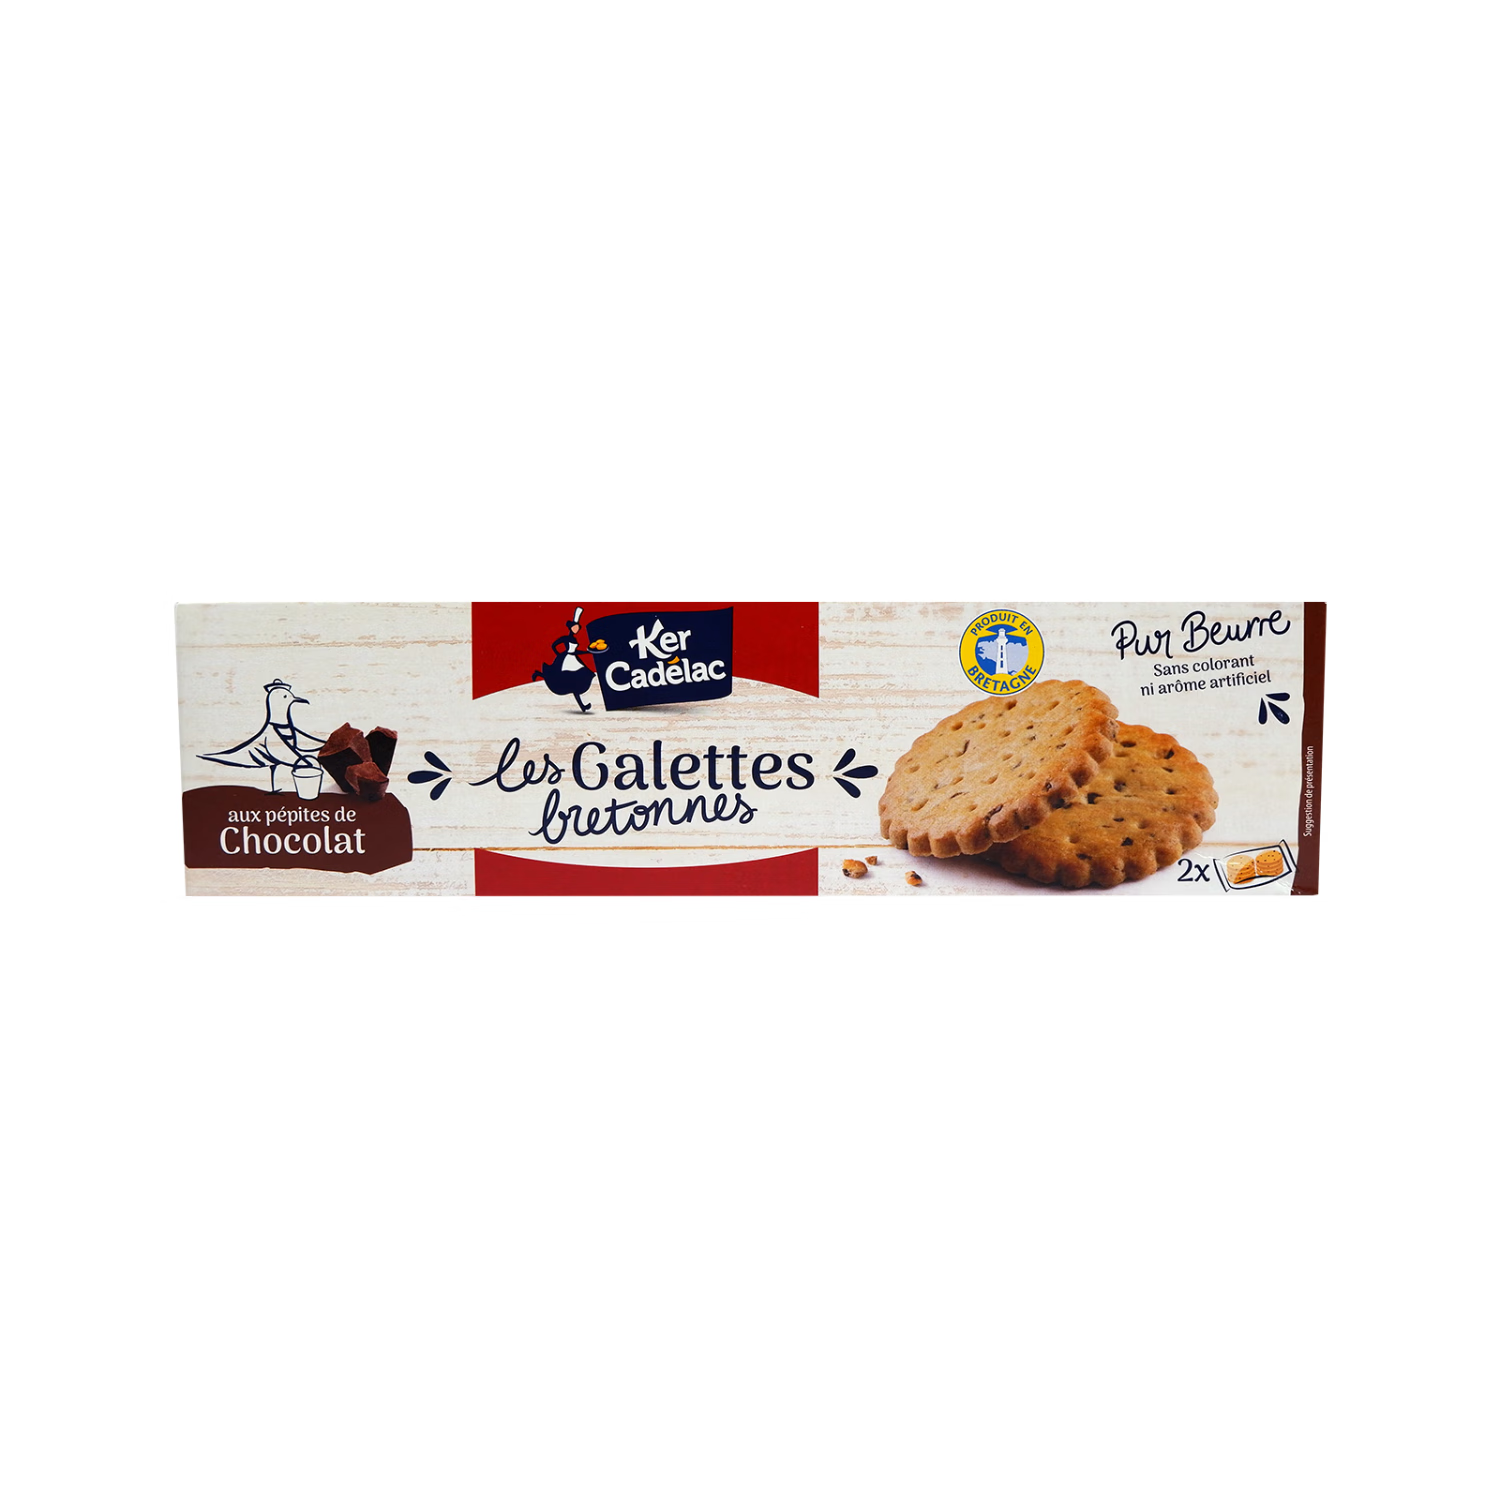 Sante 三特 Ker Cadelac 法国进口 巧克力黄油法式曲奇饼干120g 网红小零食 22.9元